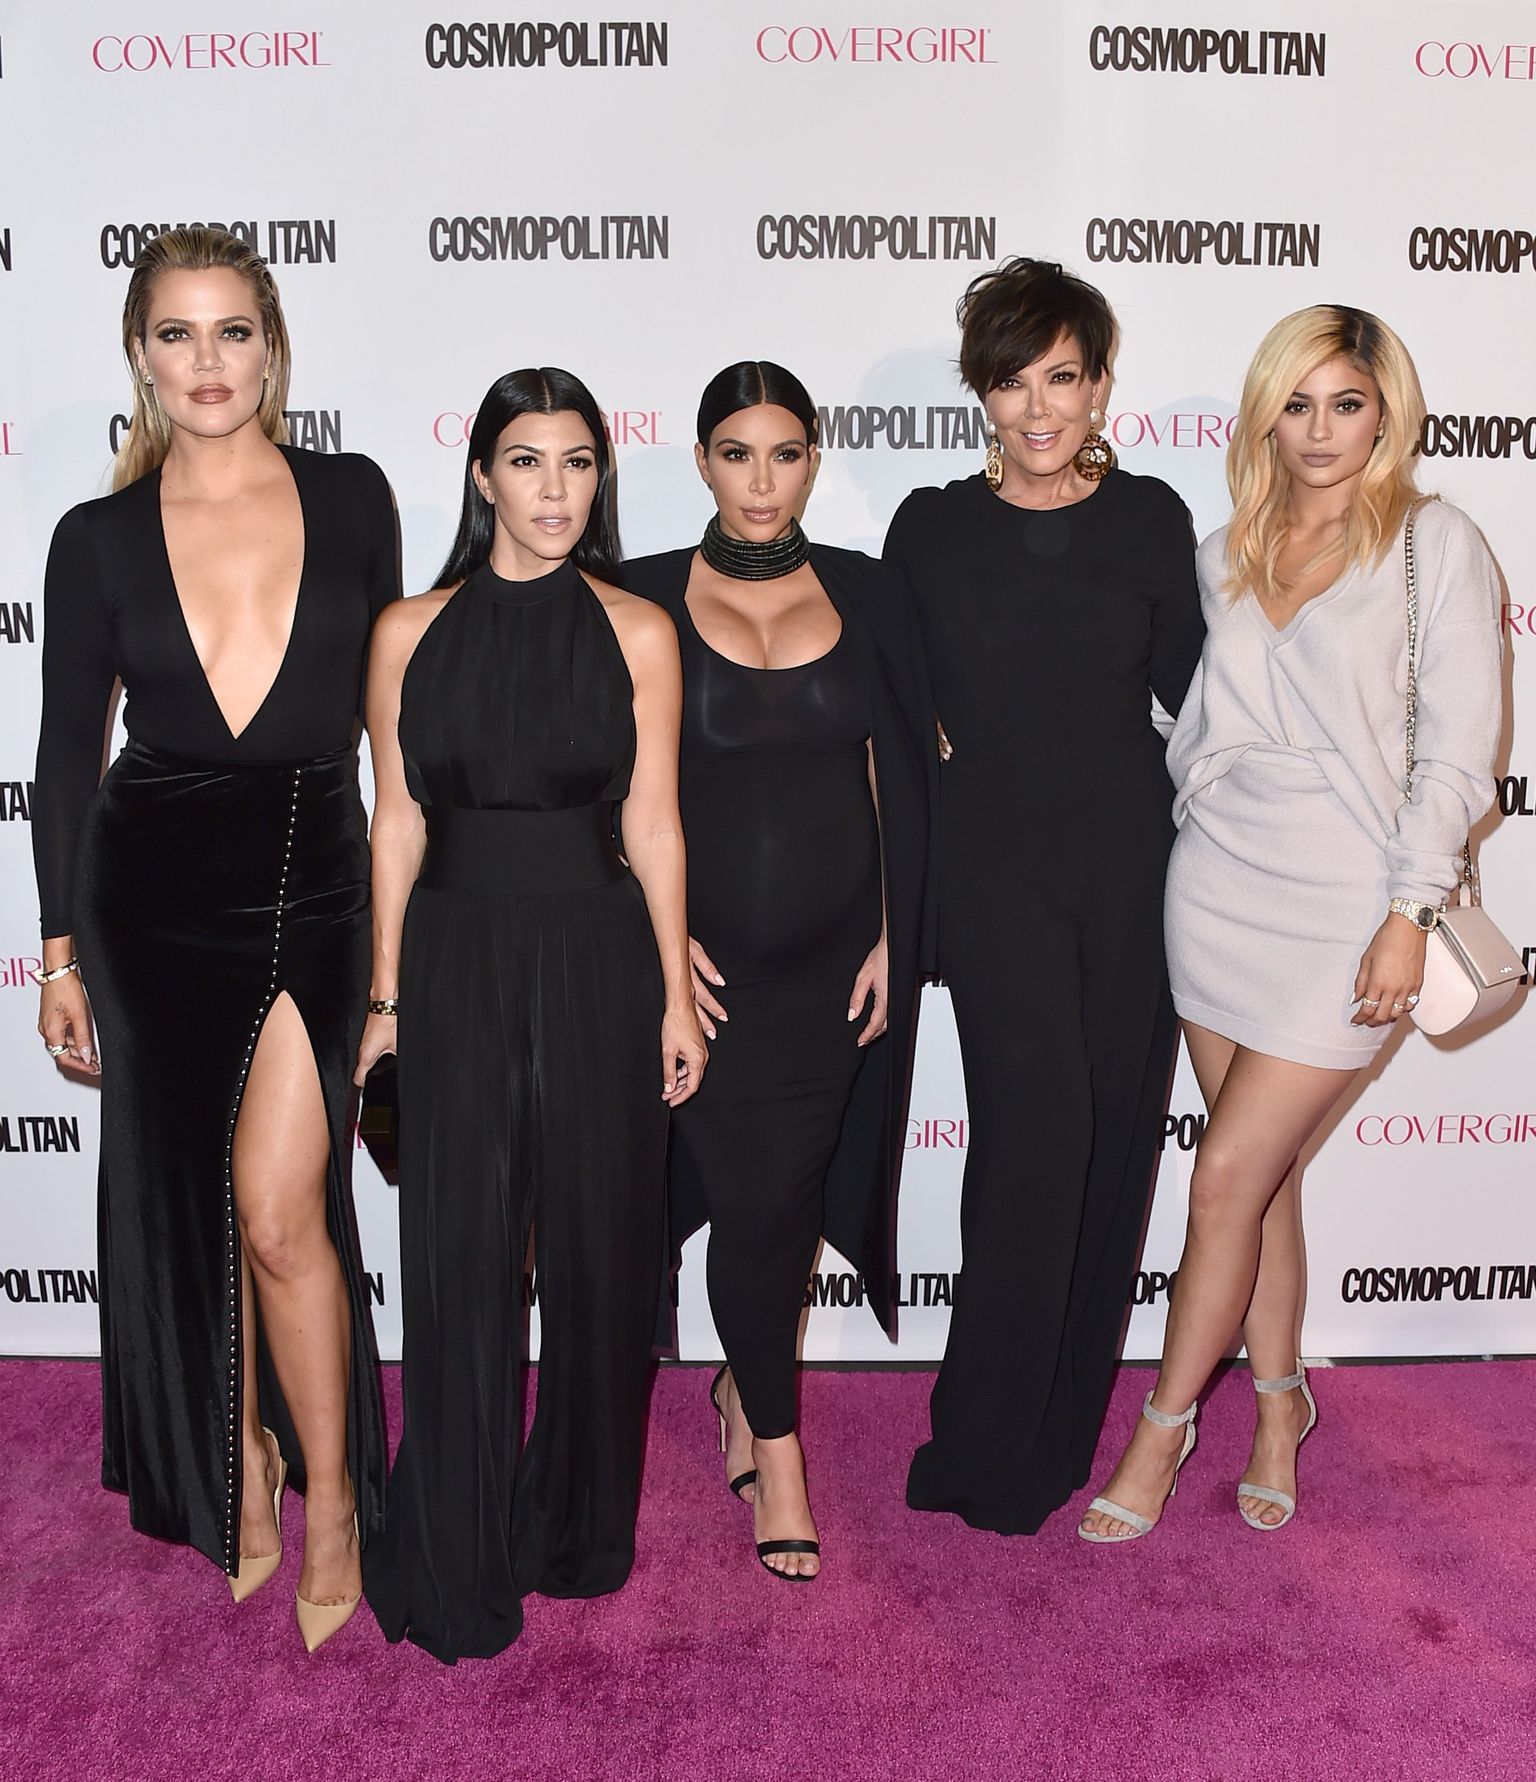 Khloe Kardashian, Kourtney Kardashian, Kim Kardashian West, Kris Jenner, Kylie Jenner